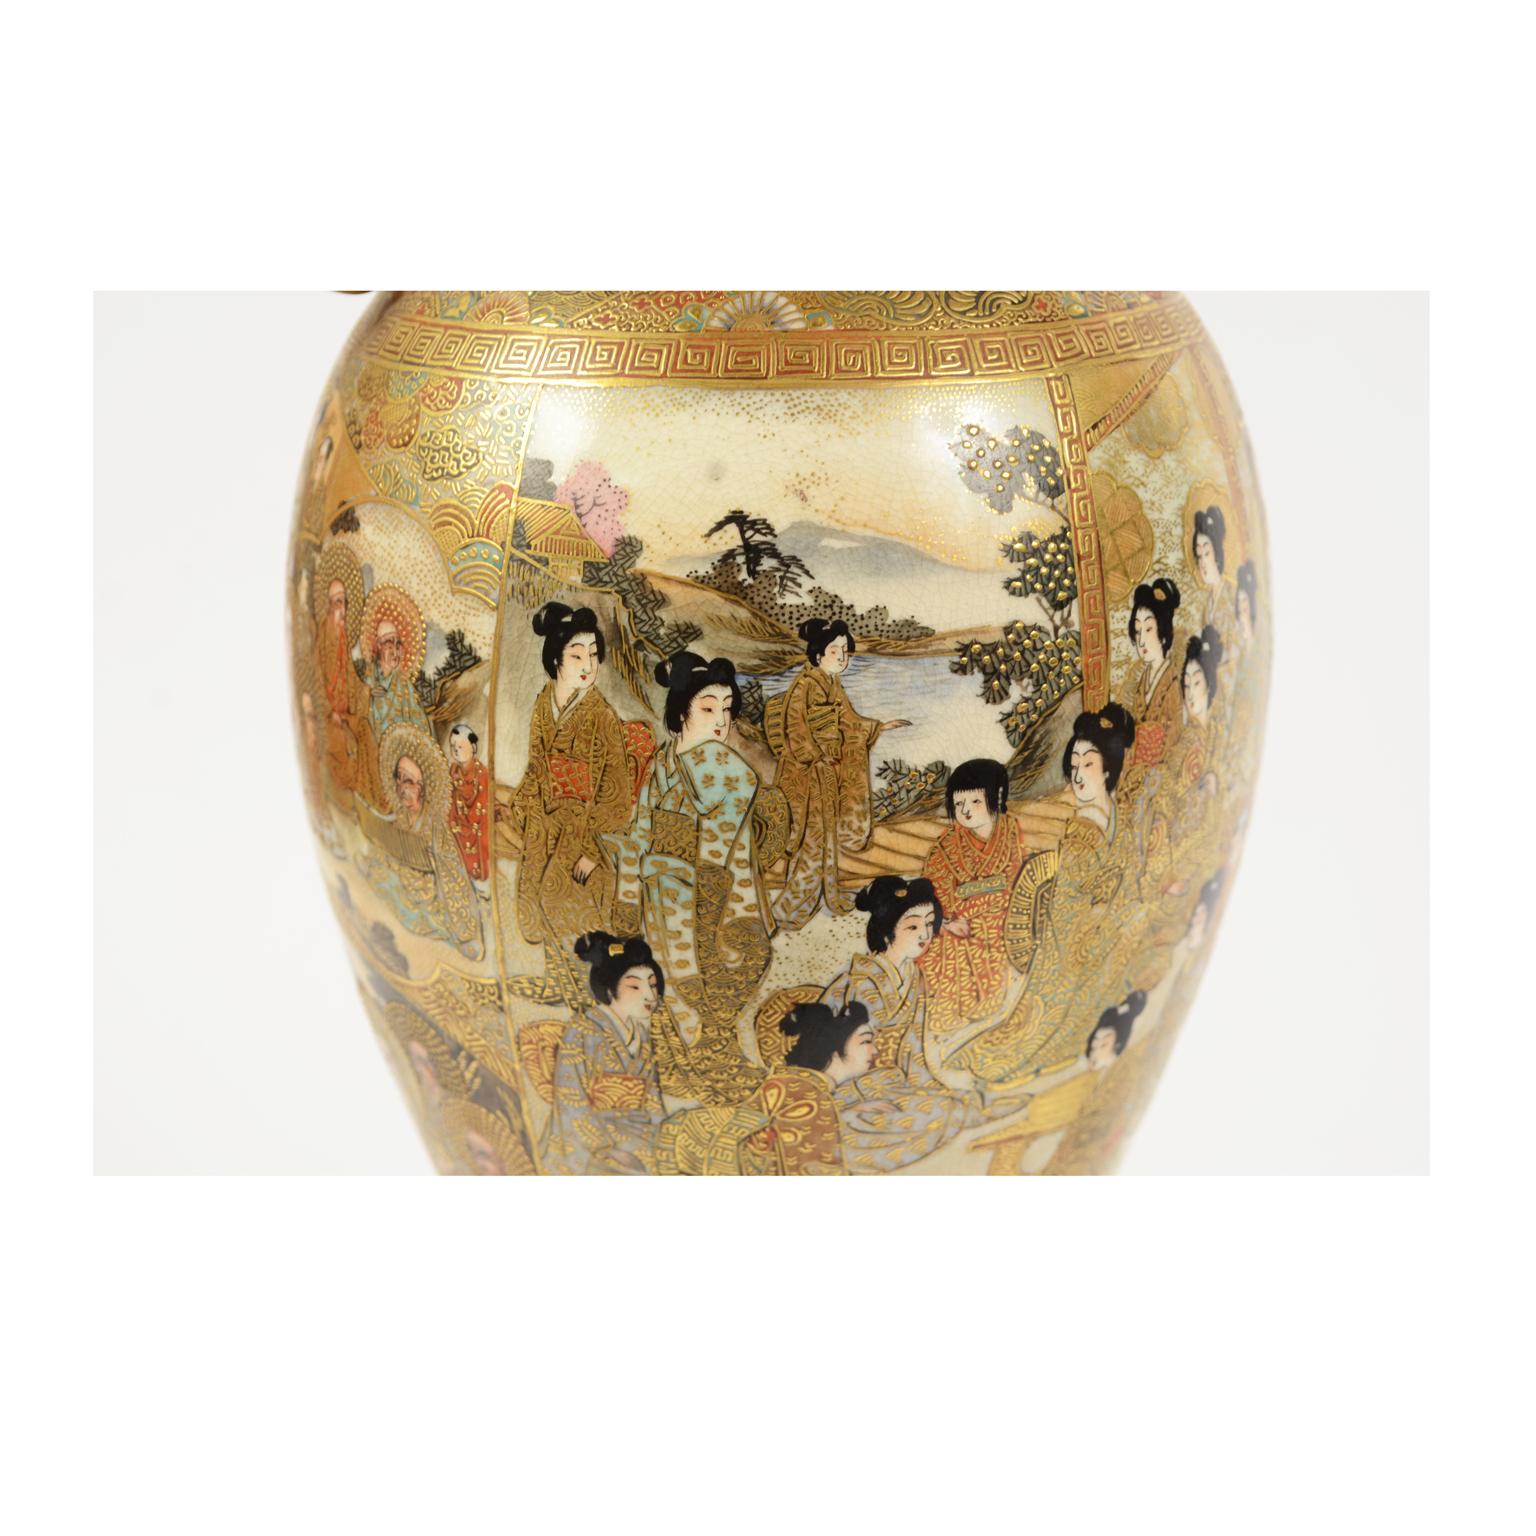 Pair of Japanese Ceramic Satsuma Vases with geishas and monks, 1875 circa 10